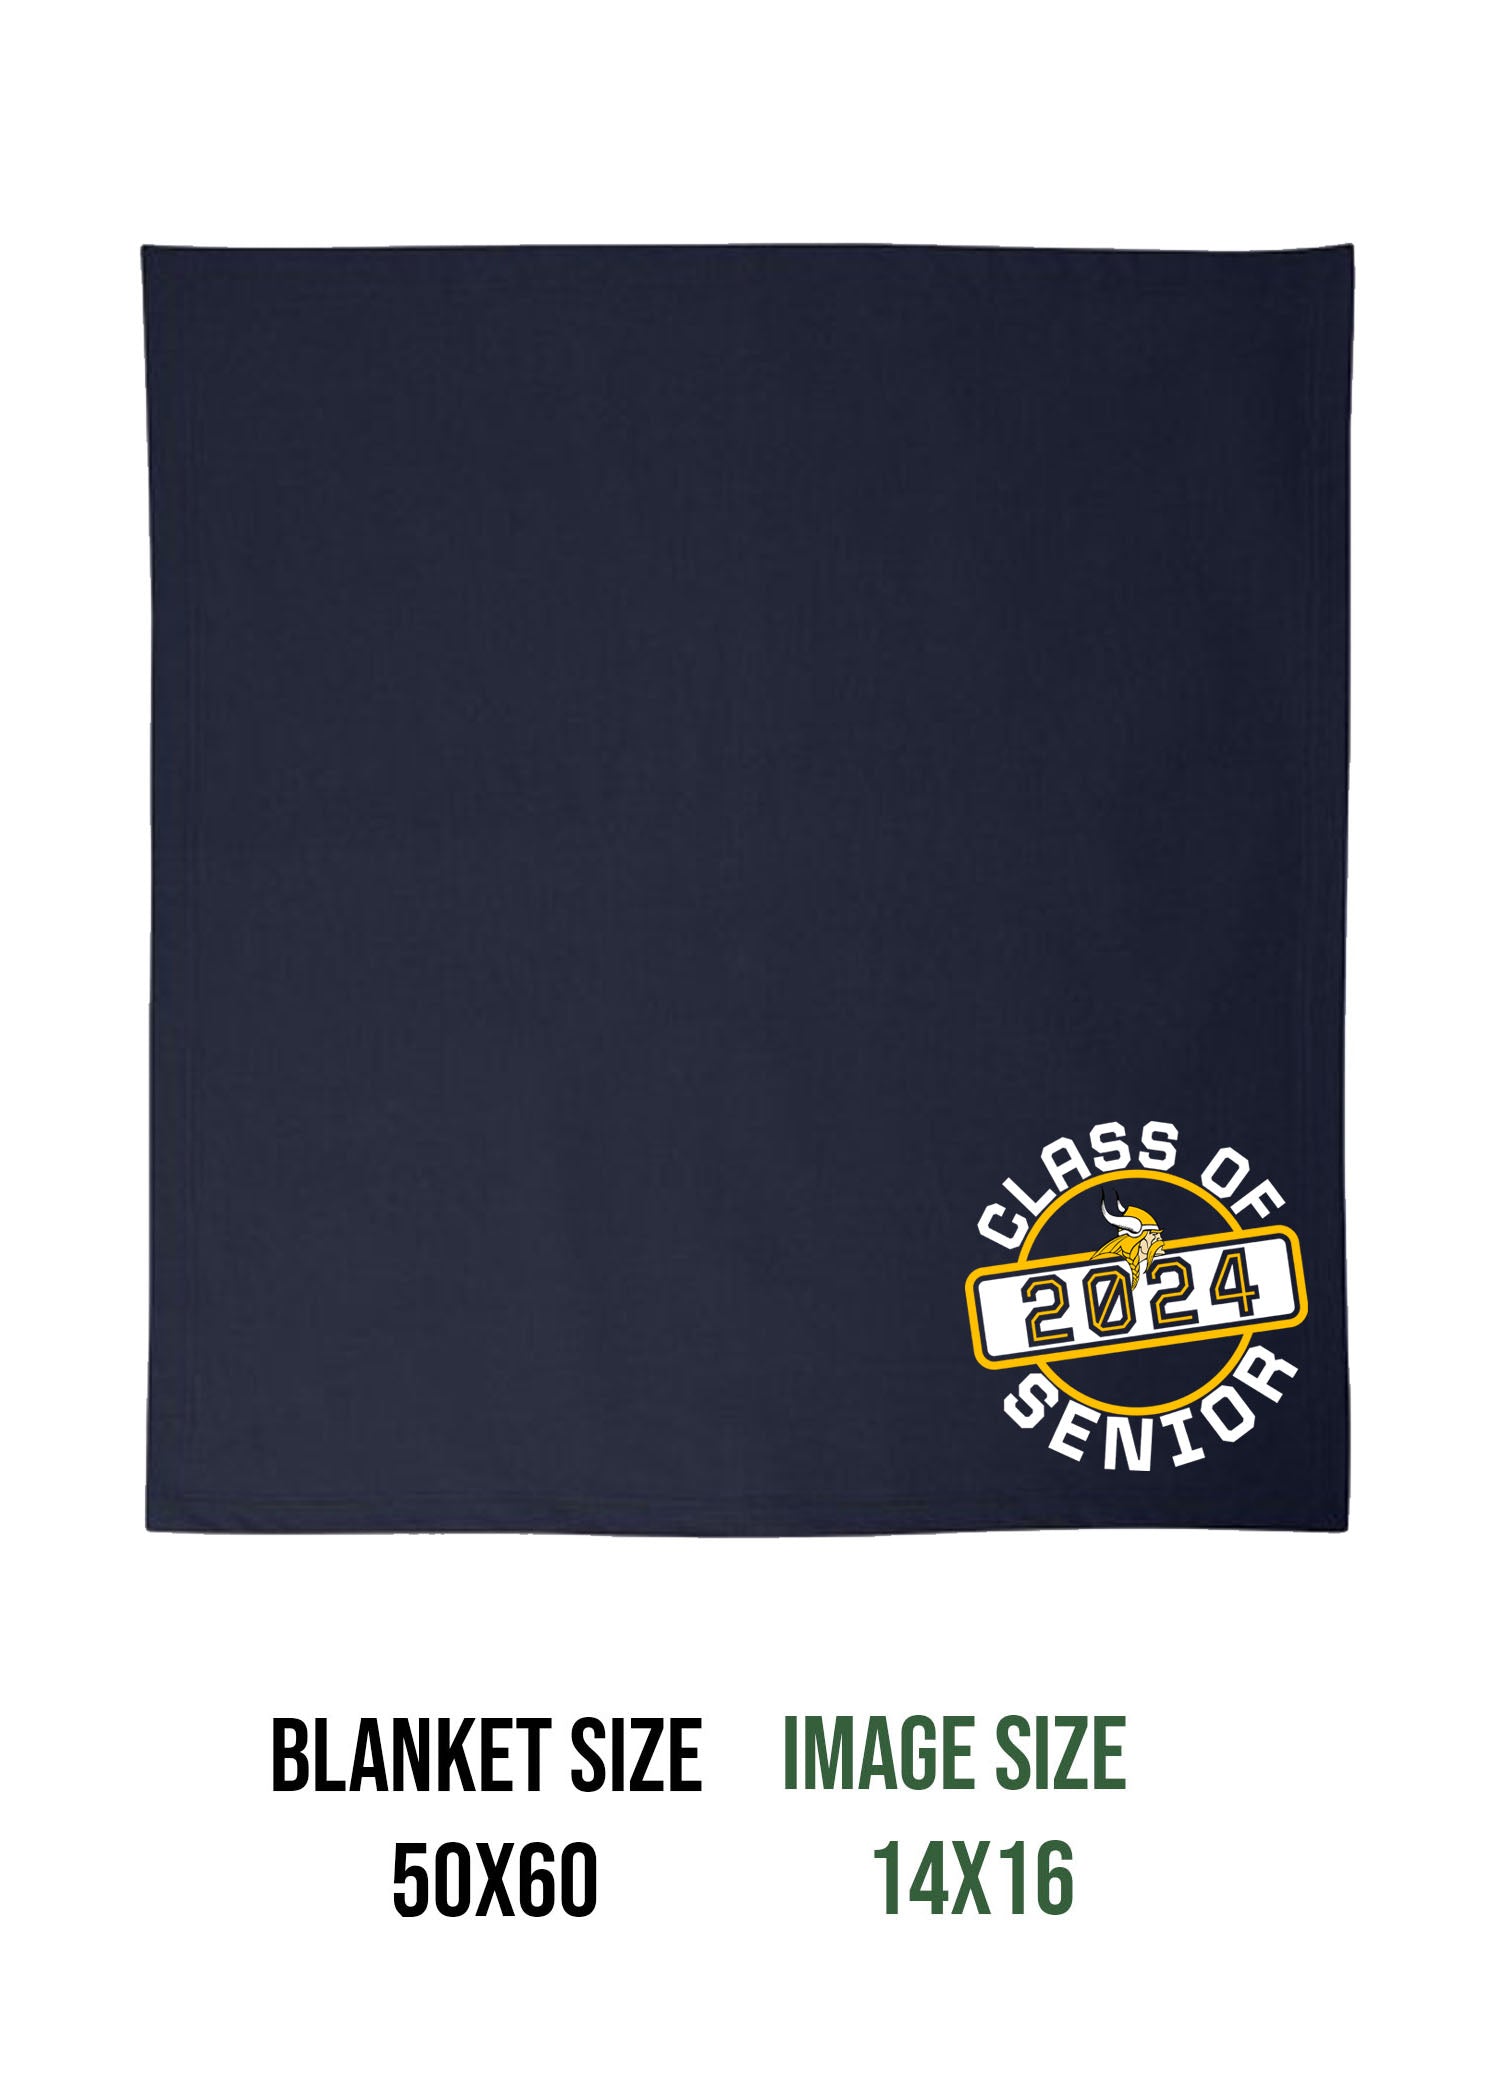 VTHS Design 5 Blanket